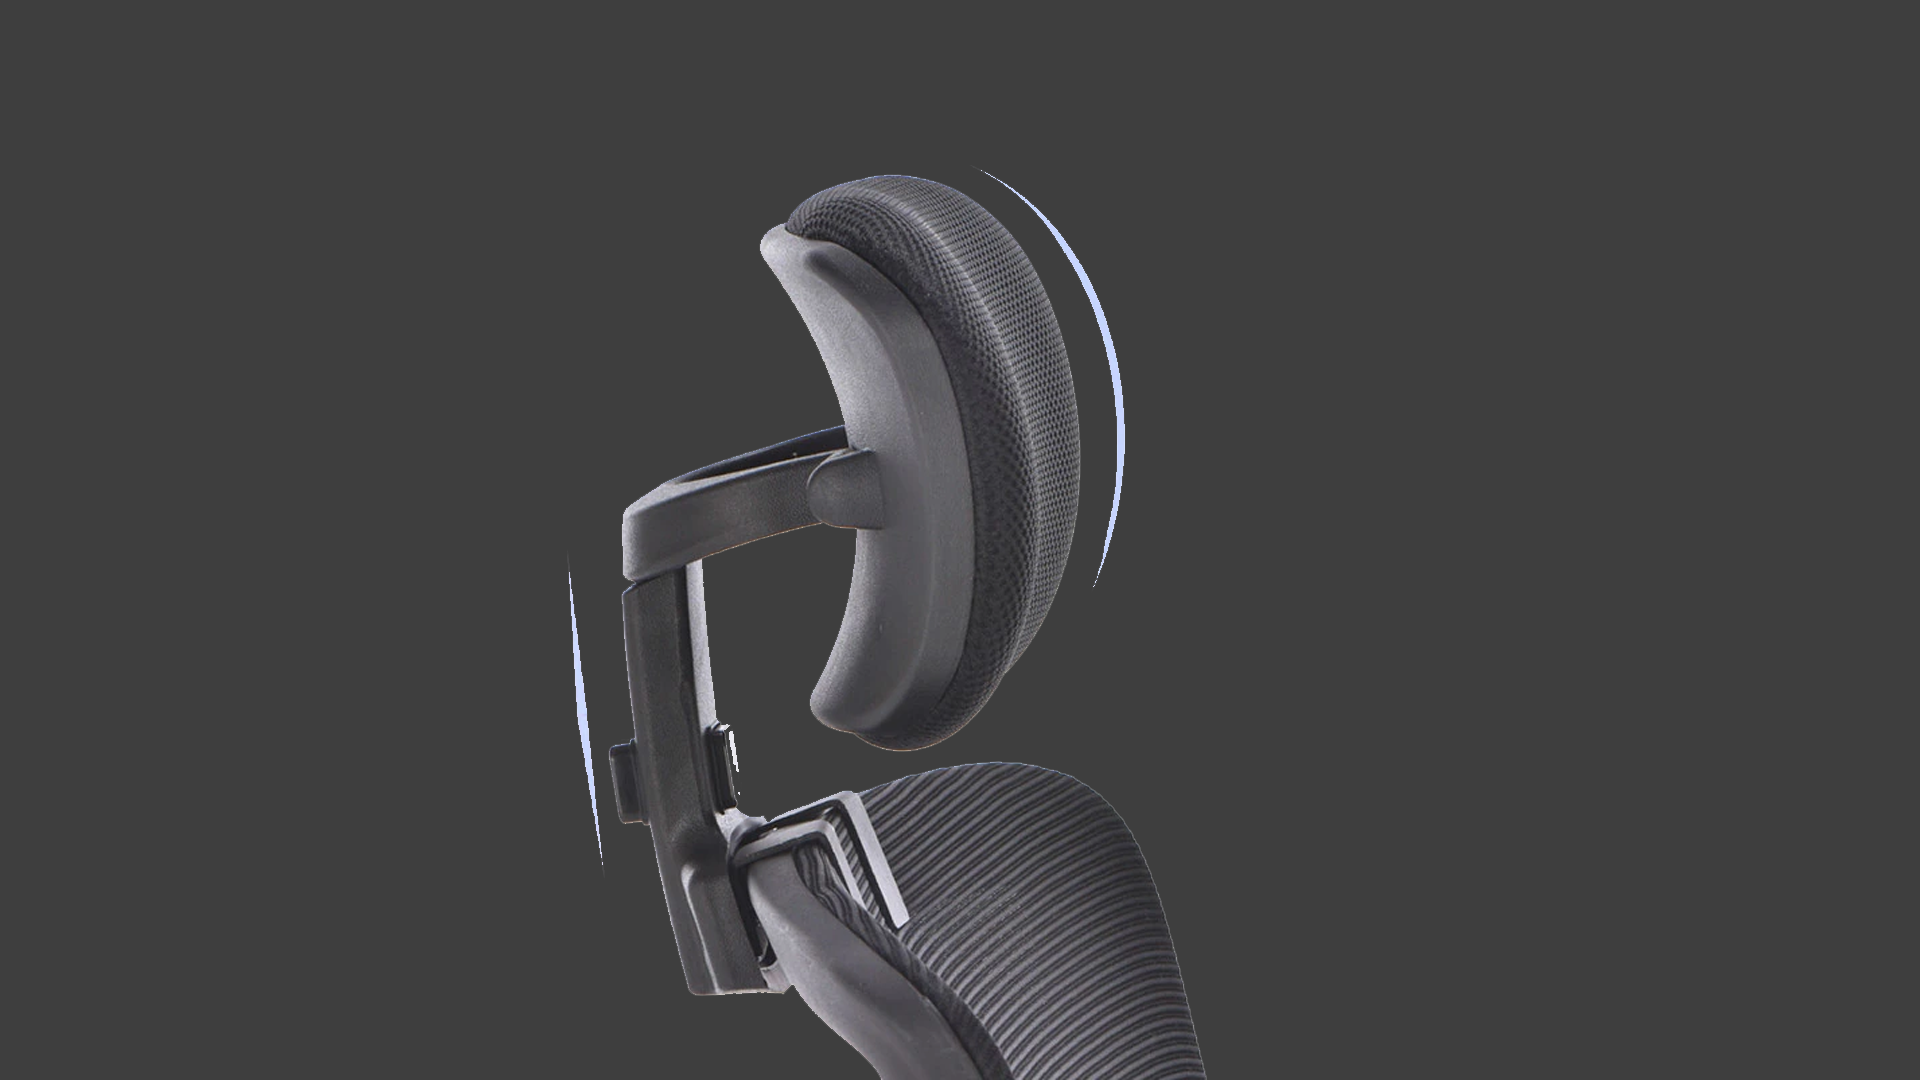 Regular office chairs with contoured ergonomic design lumbar pillow, fixed headrest